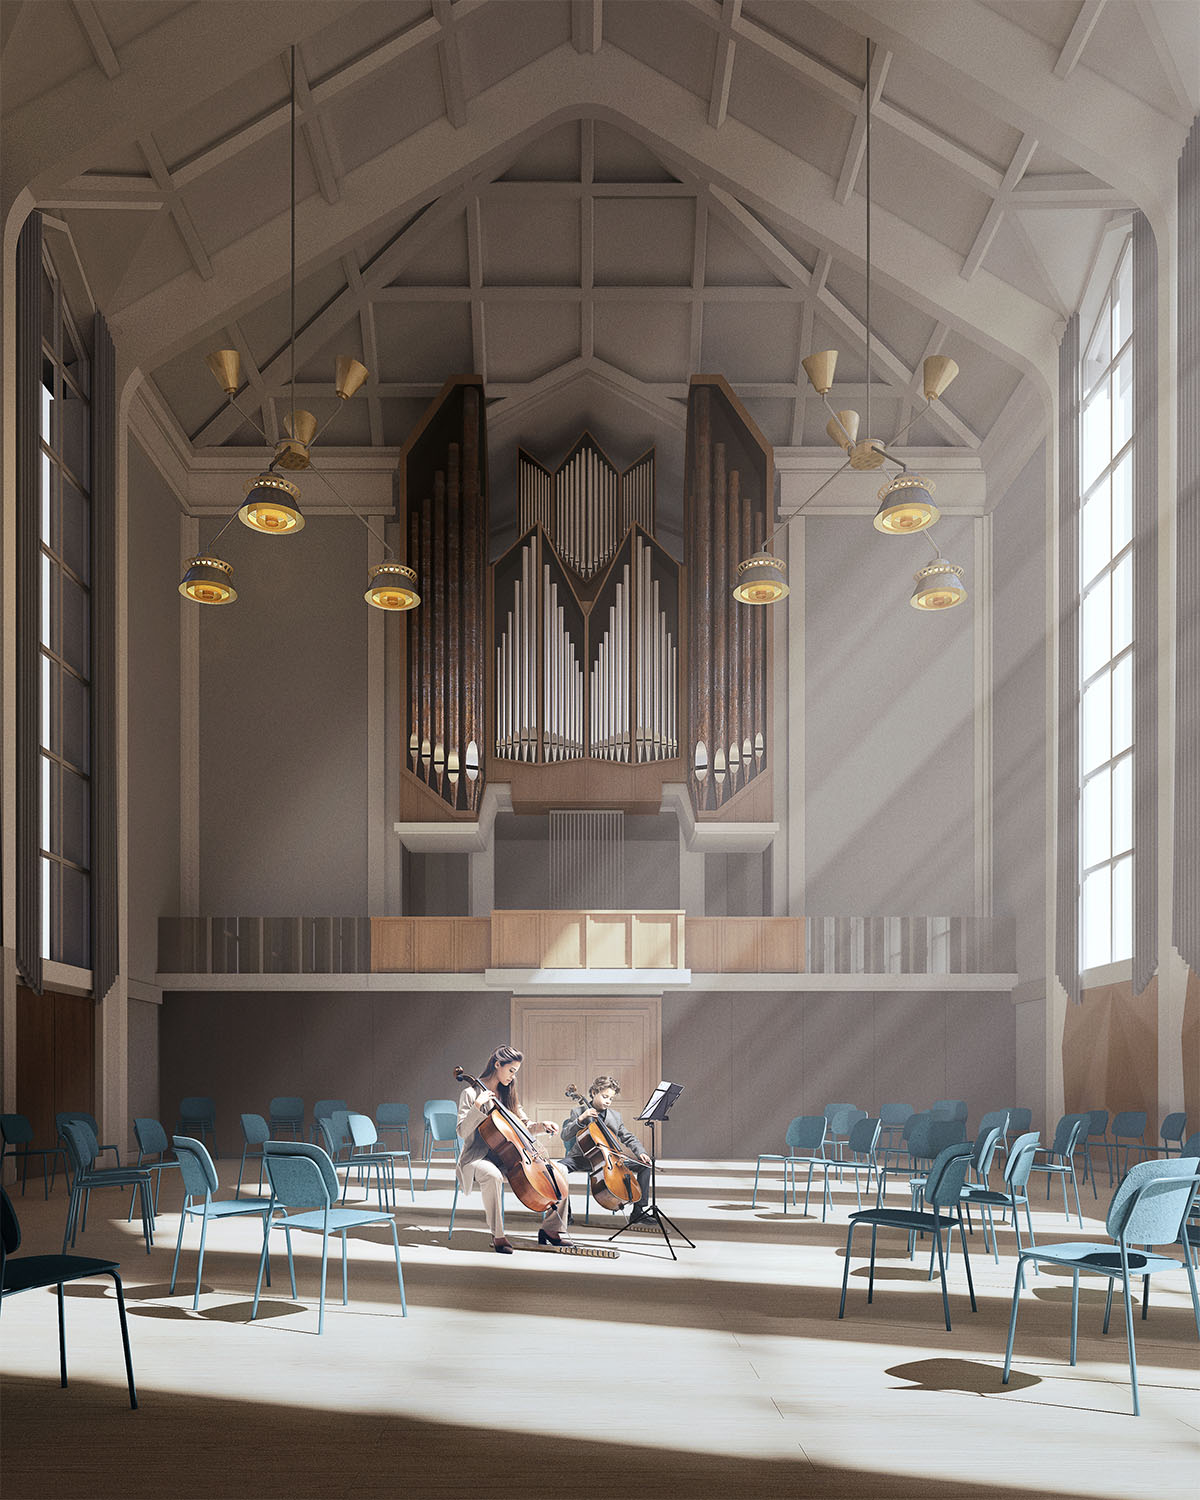 Powerhouse Company transforms post-war church into a music hub in Rotterdam 